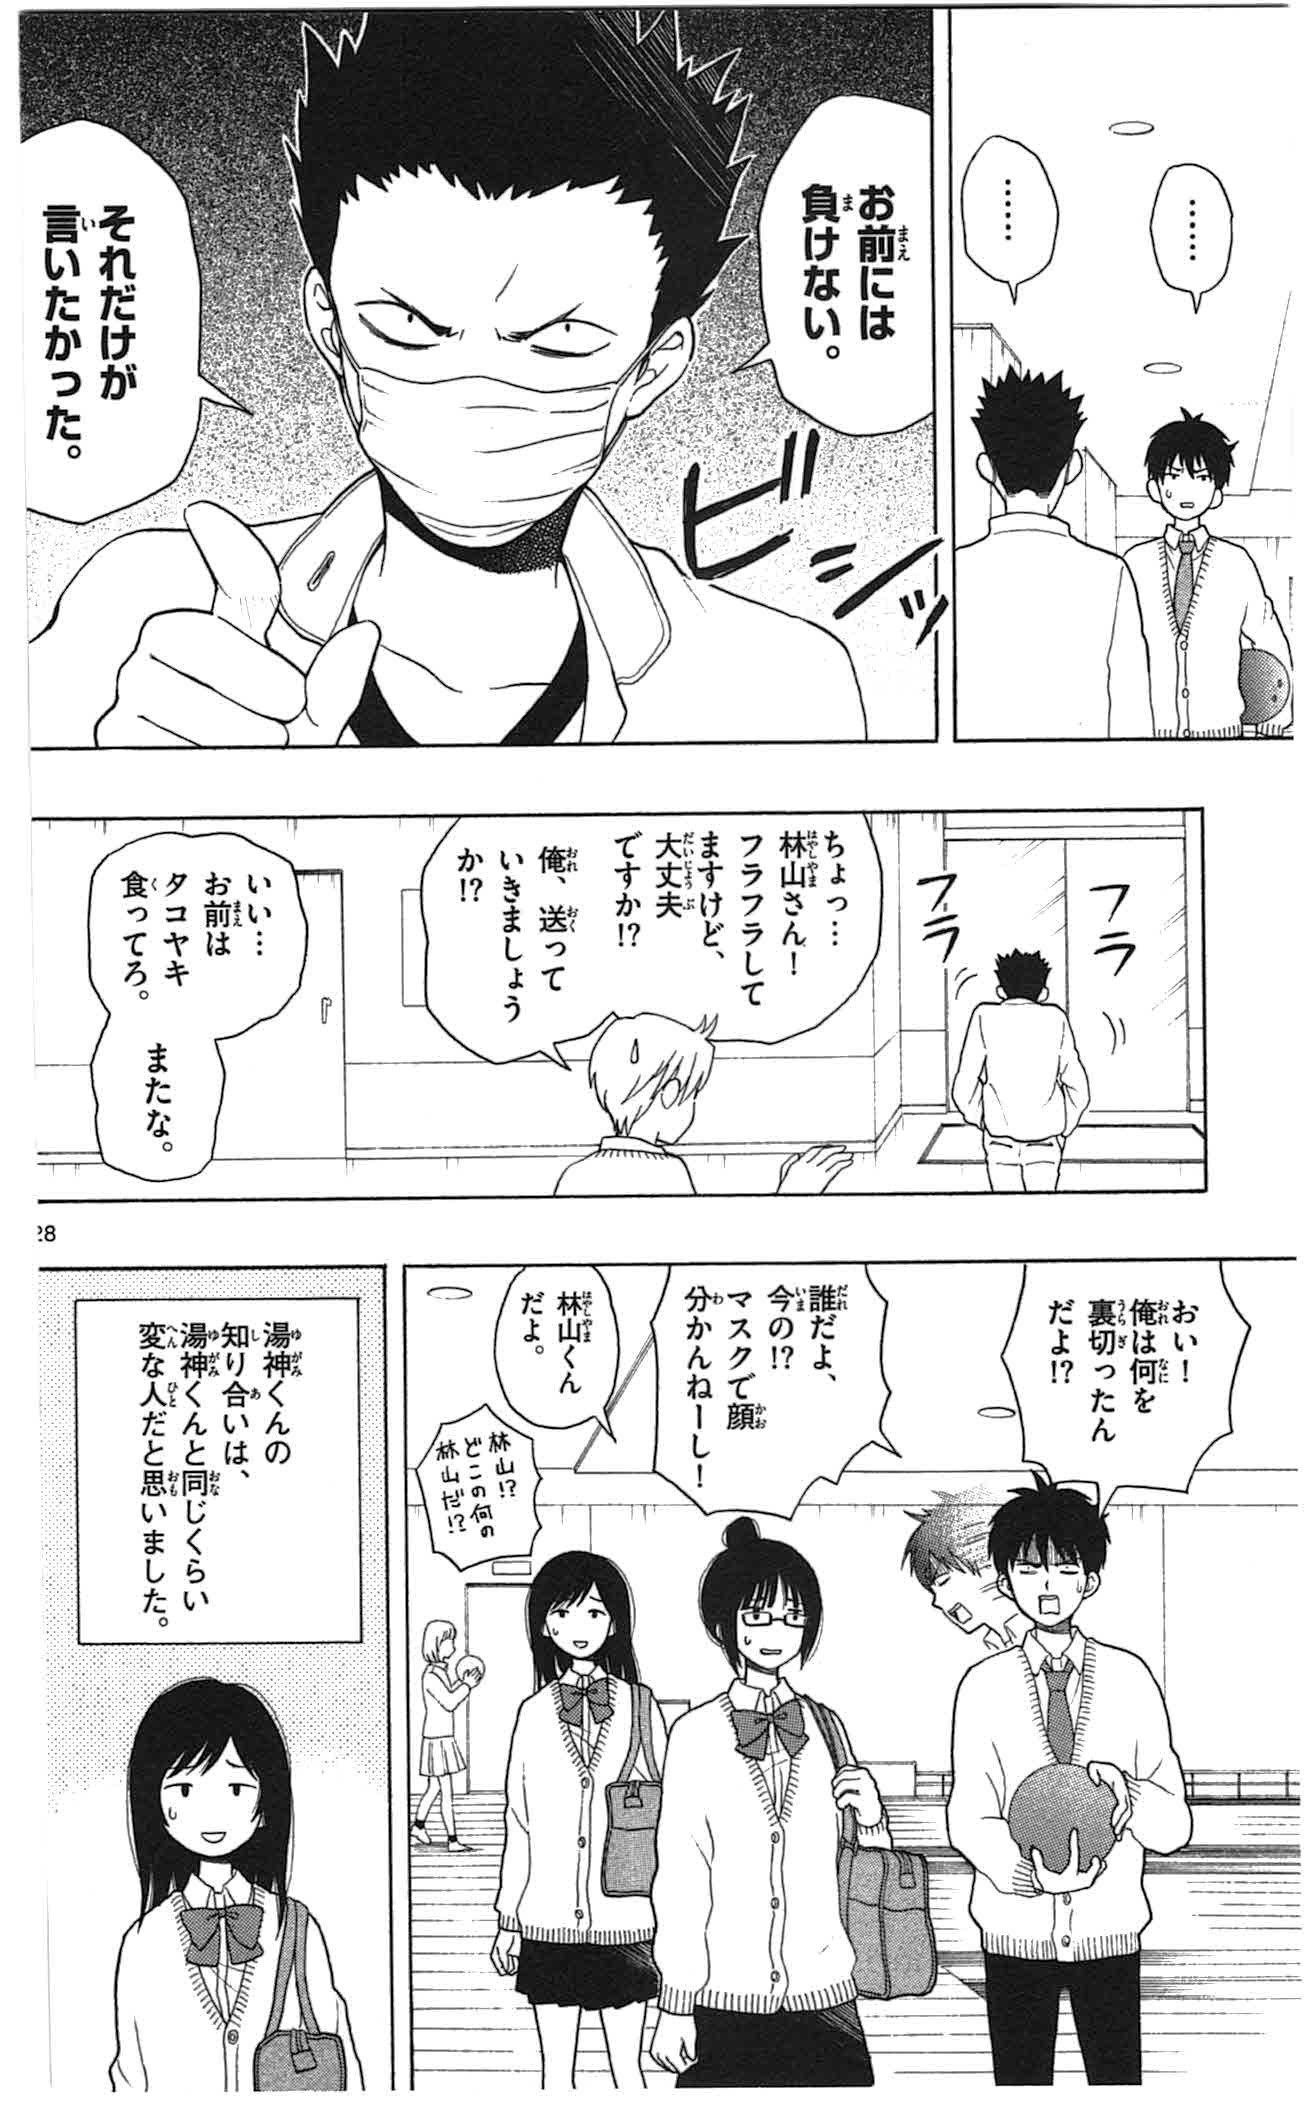 Yugami-kun ni wa Tomodachi ga Inai - Chapter 004 - Page 28